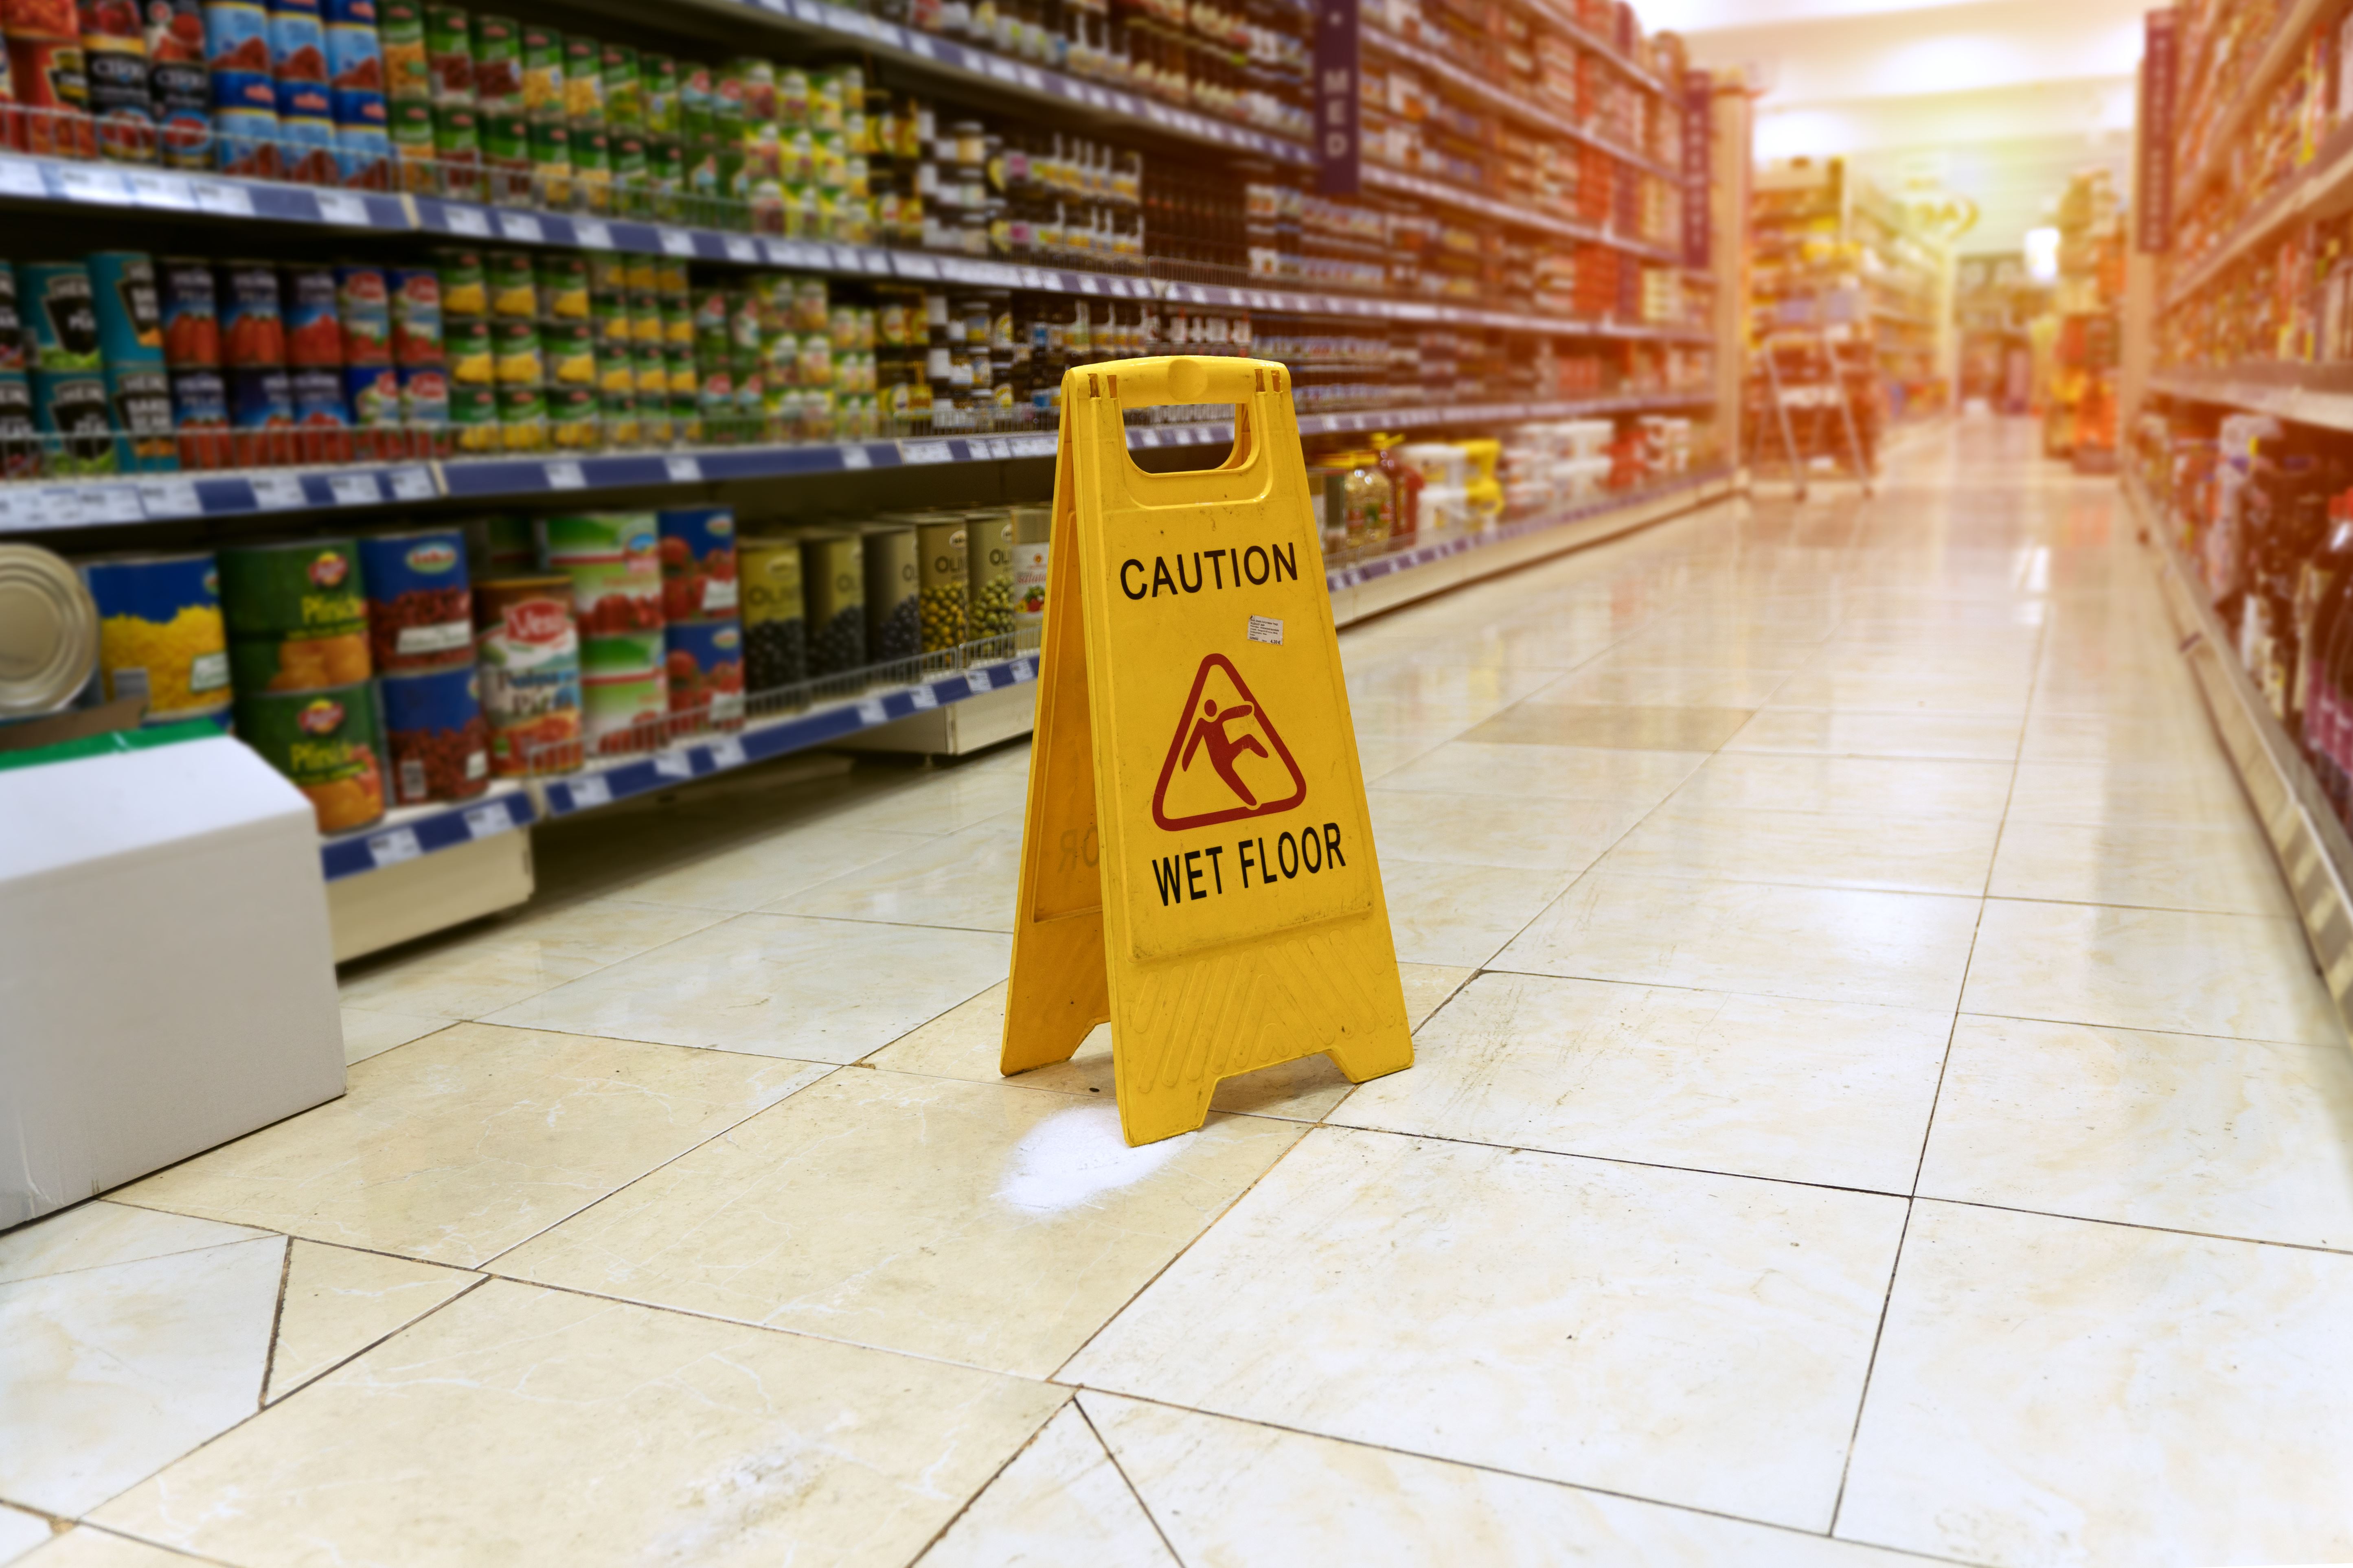 caution wet floor sign in super market aisle